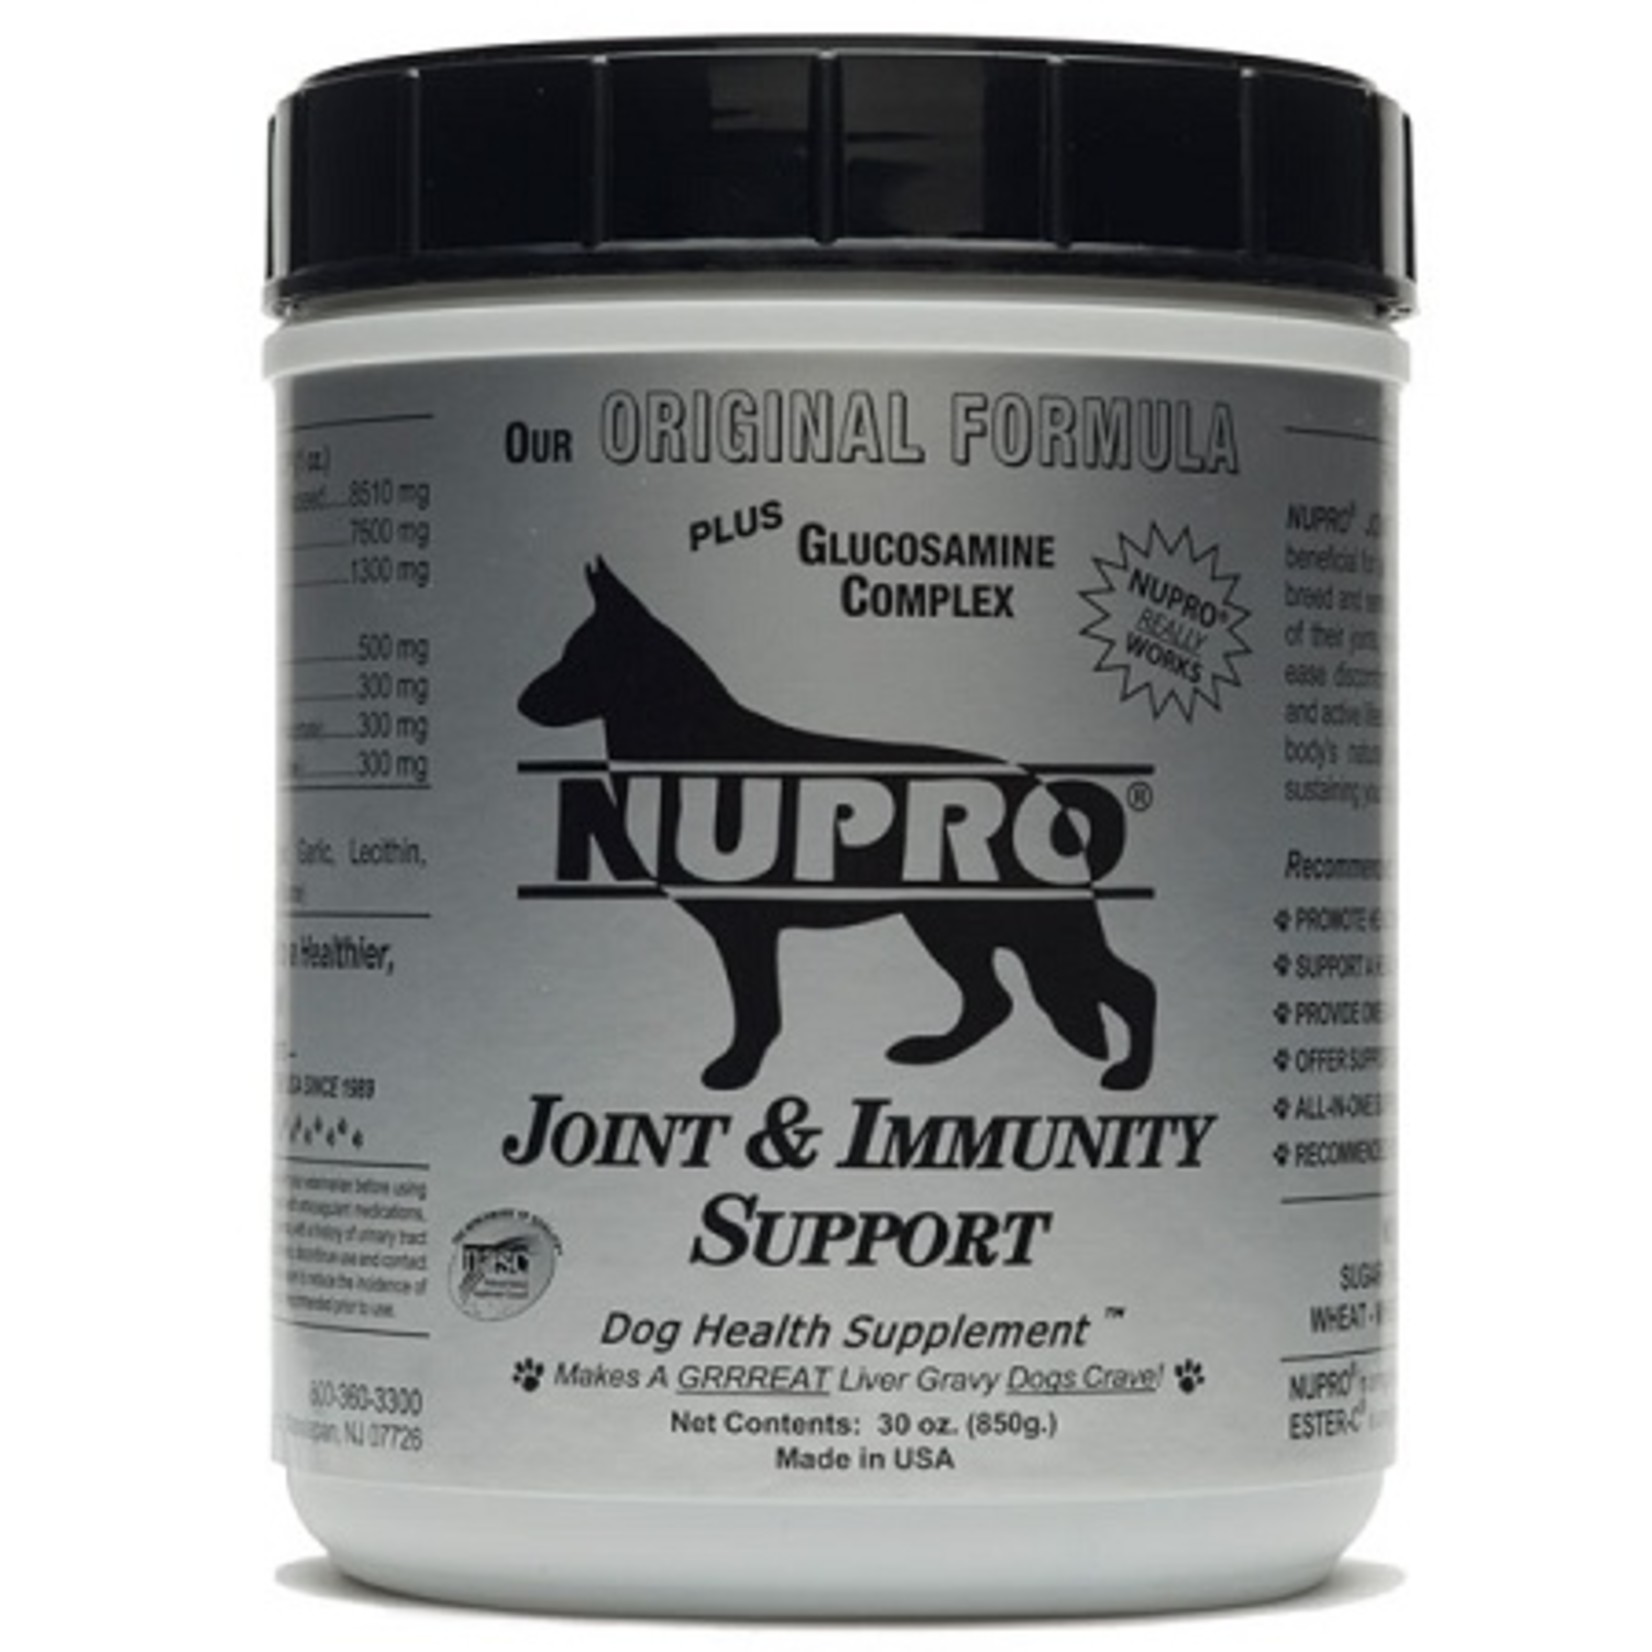 Nupro Nupro Joint & Immunity Support Dog Health Supplement - 1lb, 30oz, 5lb